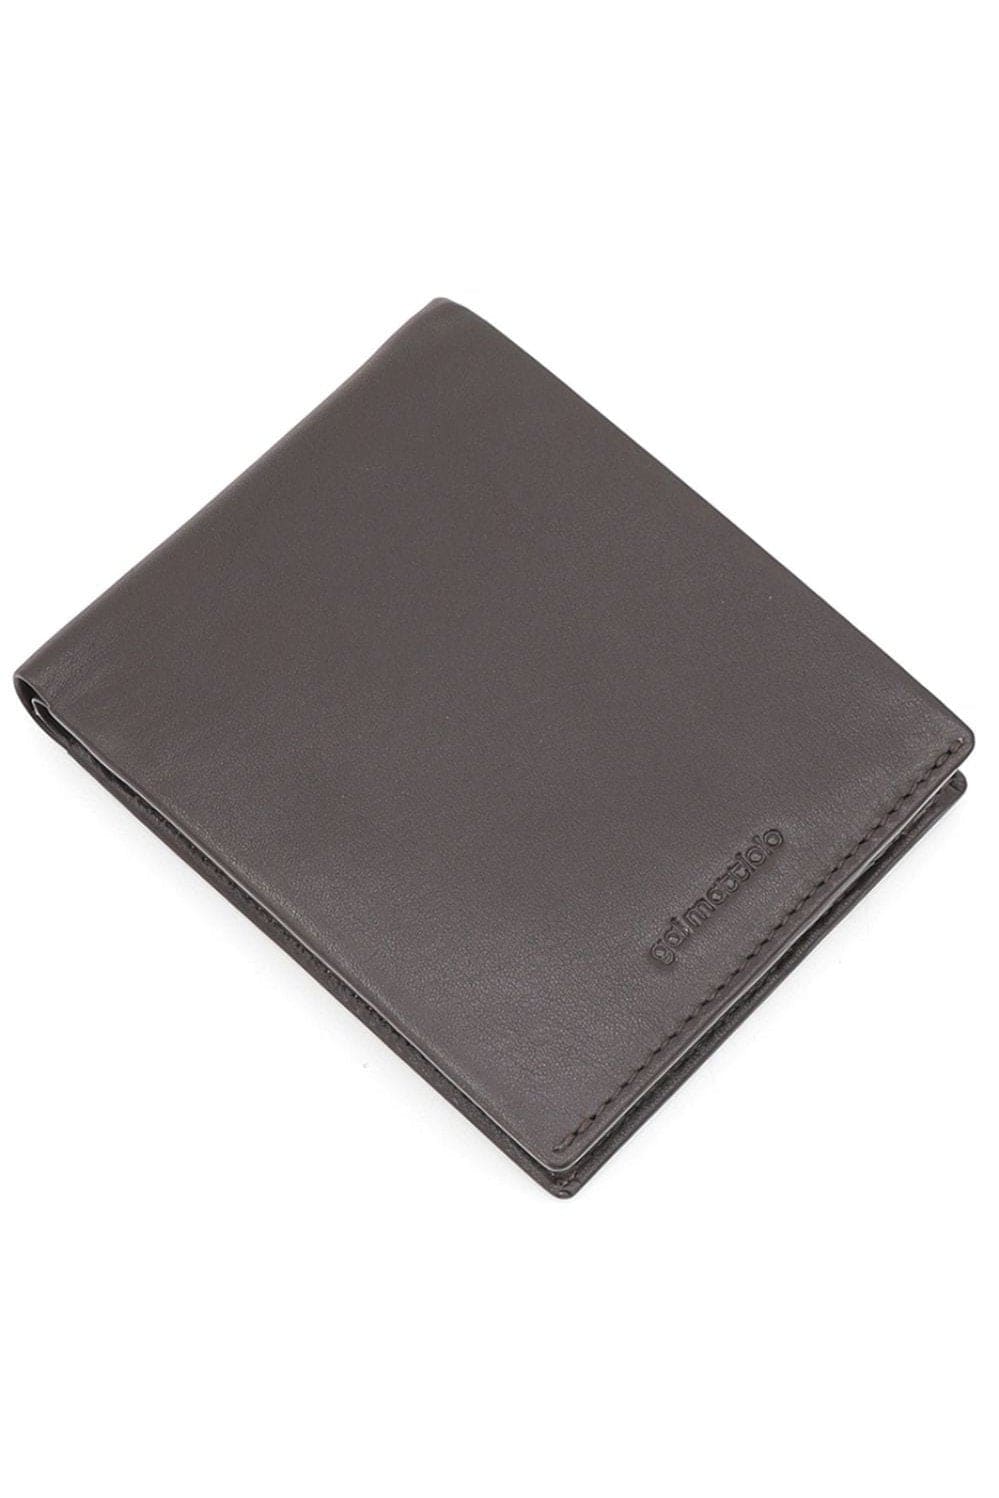 Gai Mattiolo Men's Leather Wallet, Brown Fatio General Trading